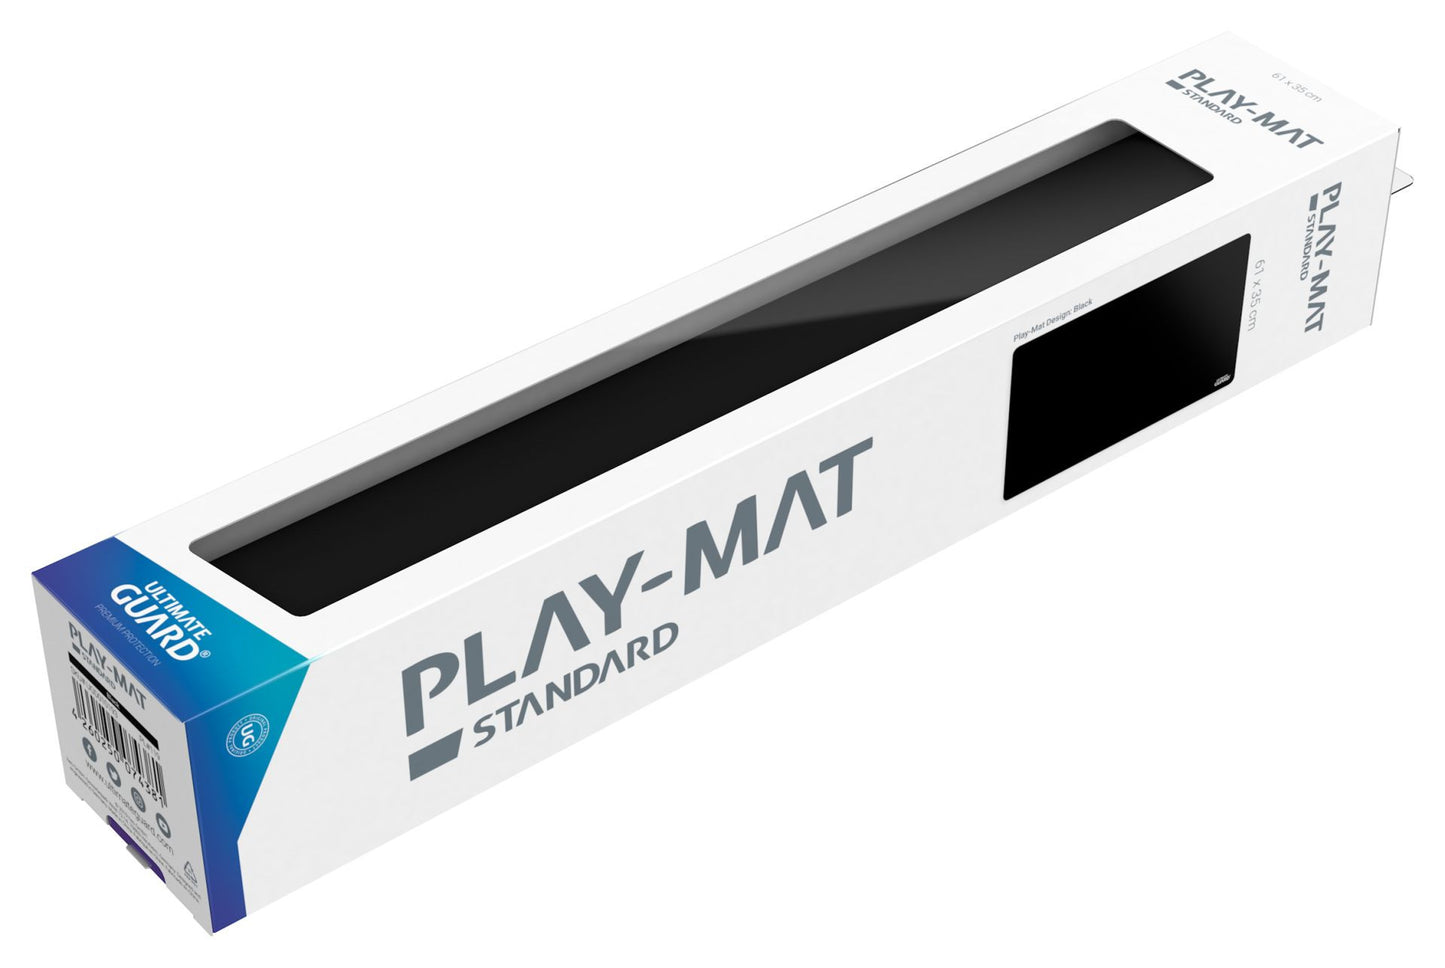 Play-Mat Nero ultimate guard 61 x 35 cm